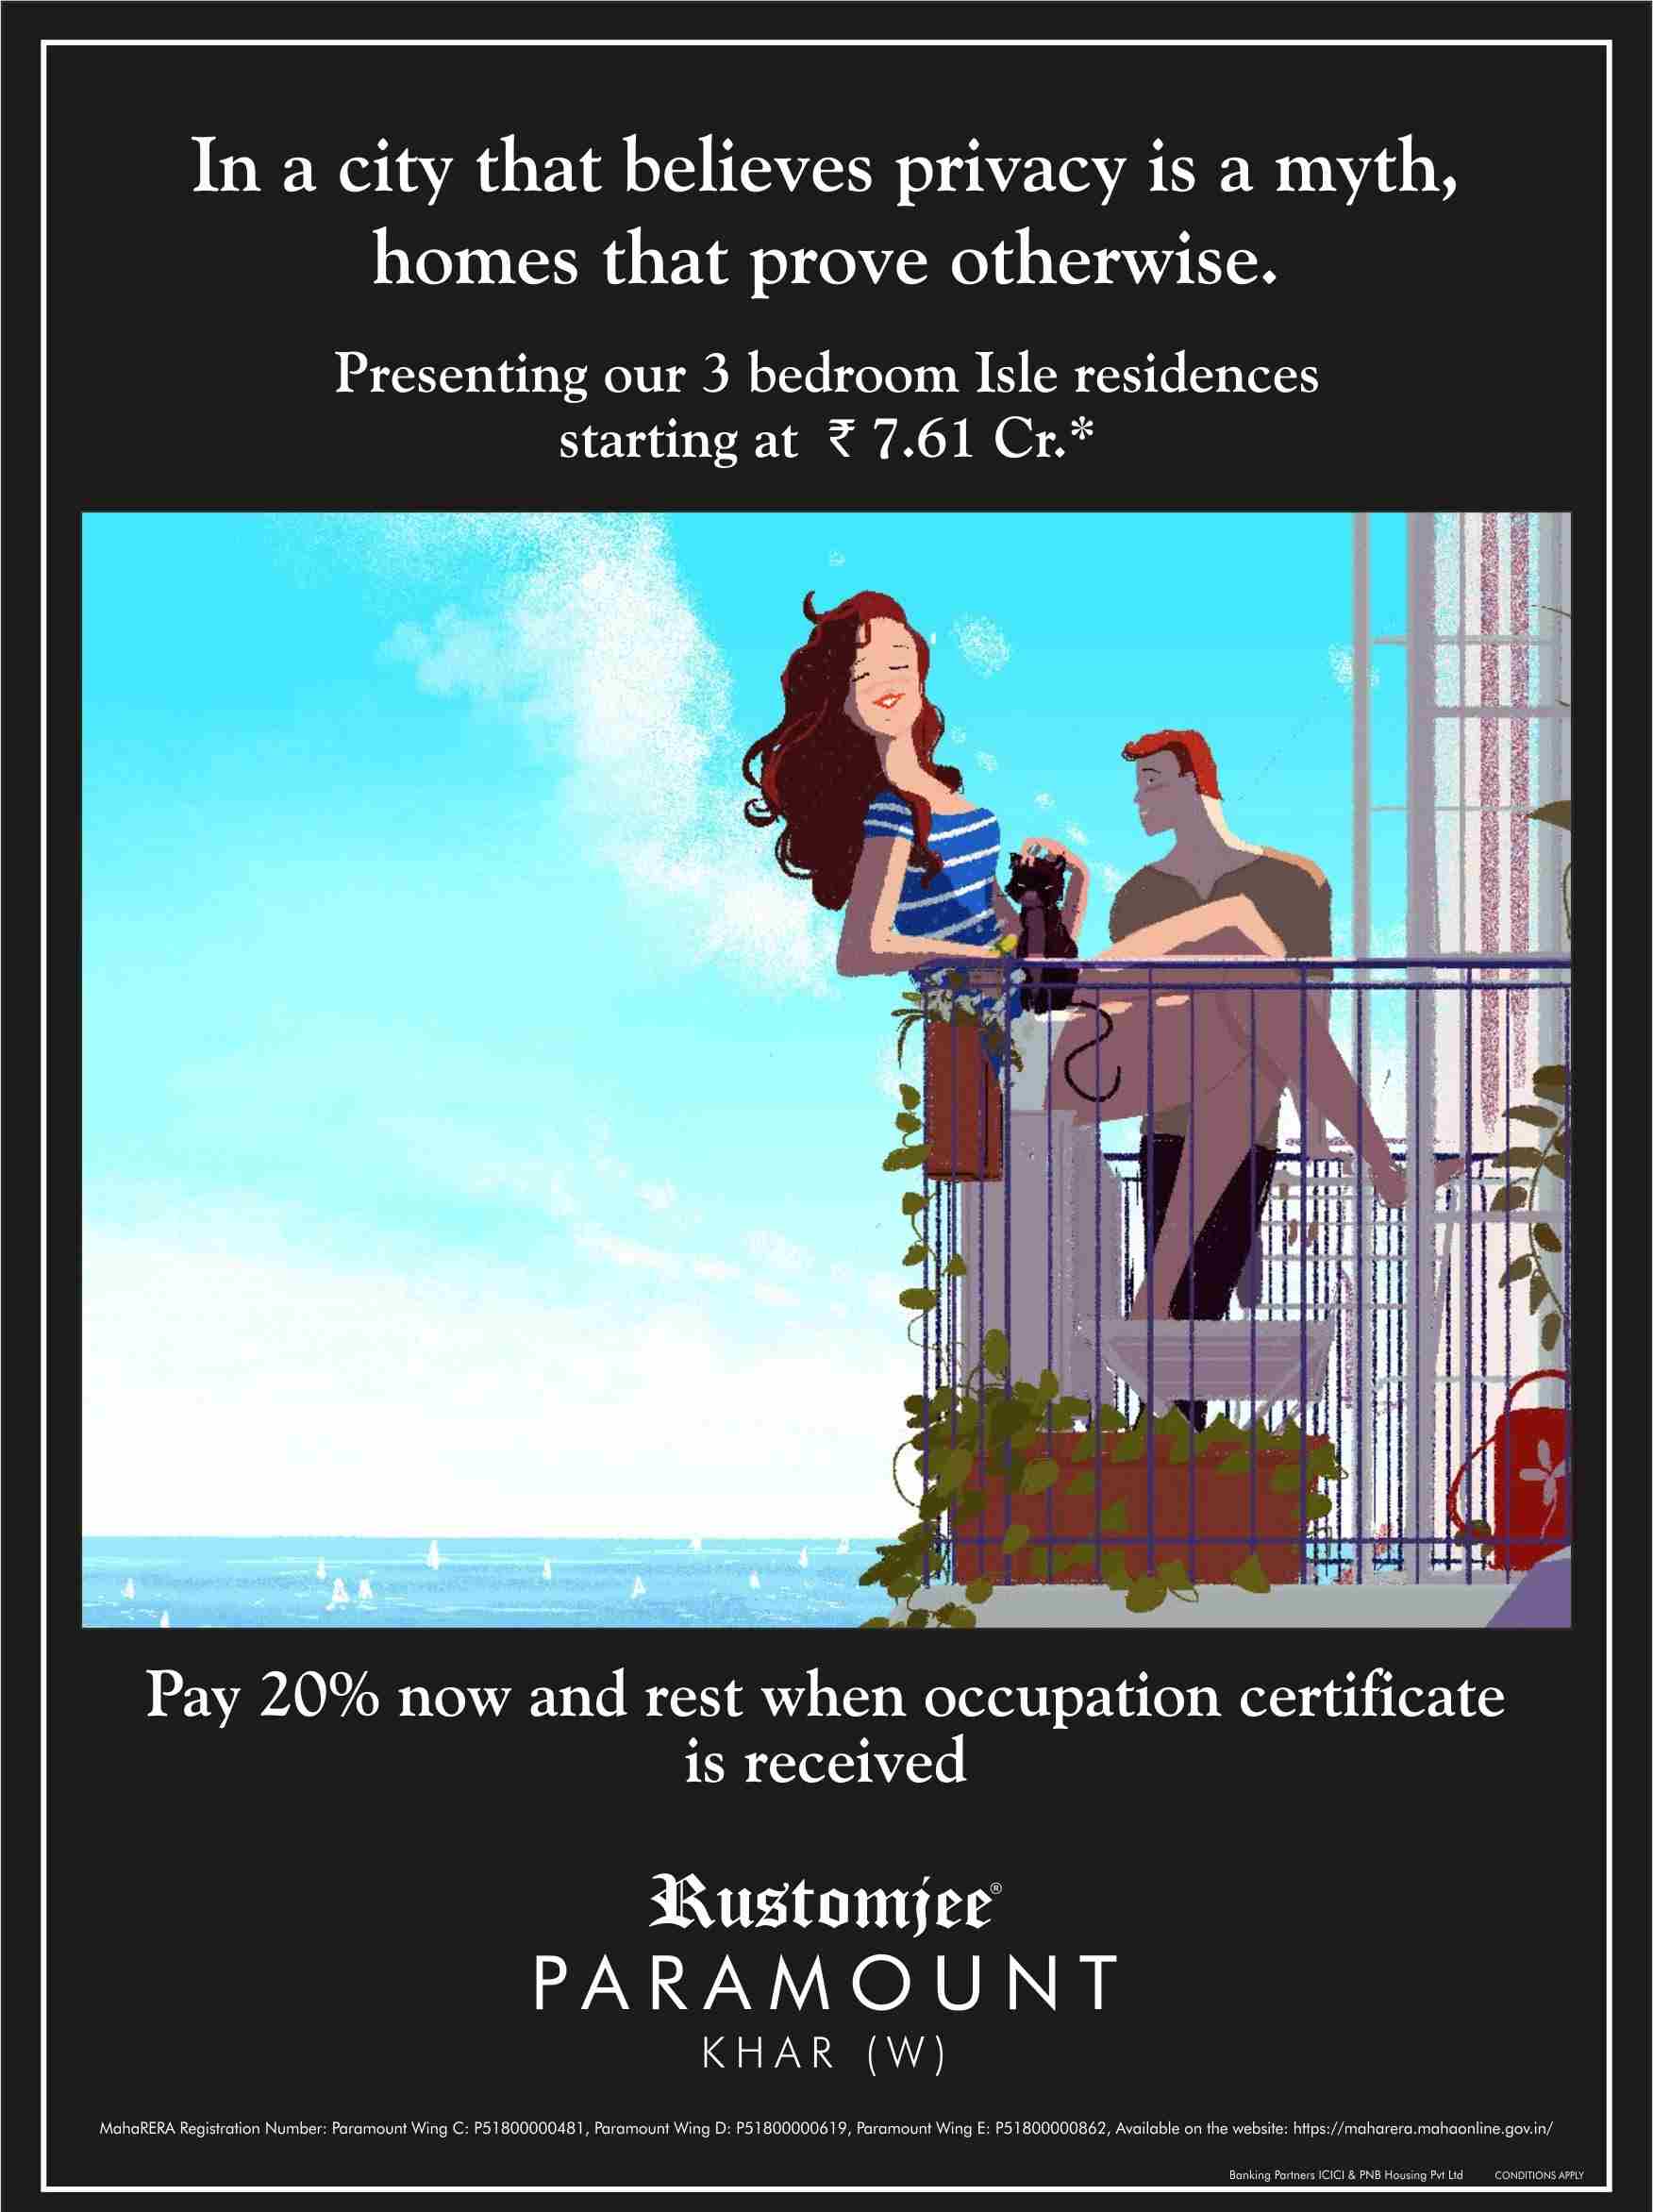 Presenting 3 bedroom Isle residences at Rustomjee Paramount in Mumbai